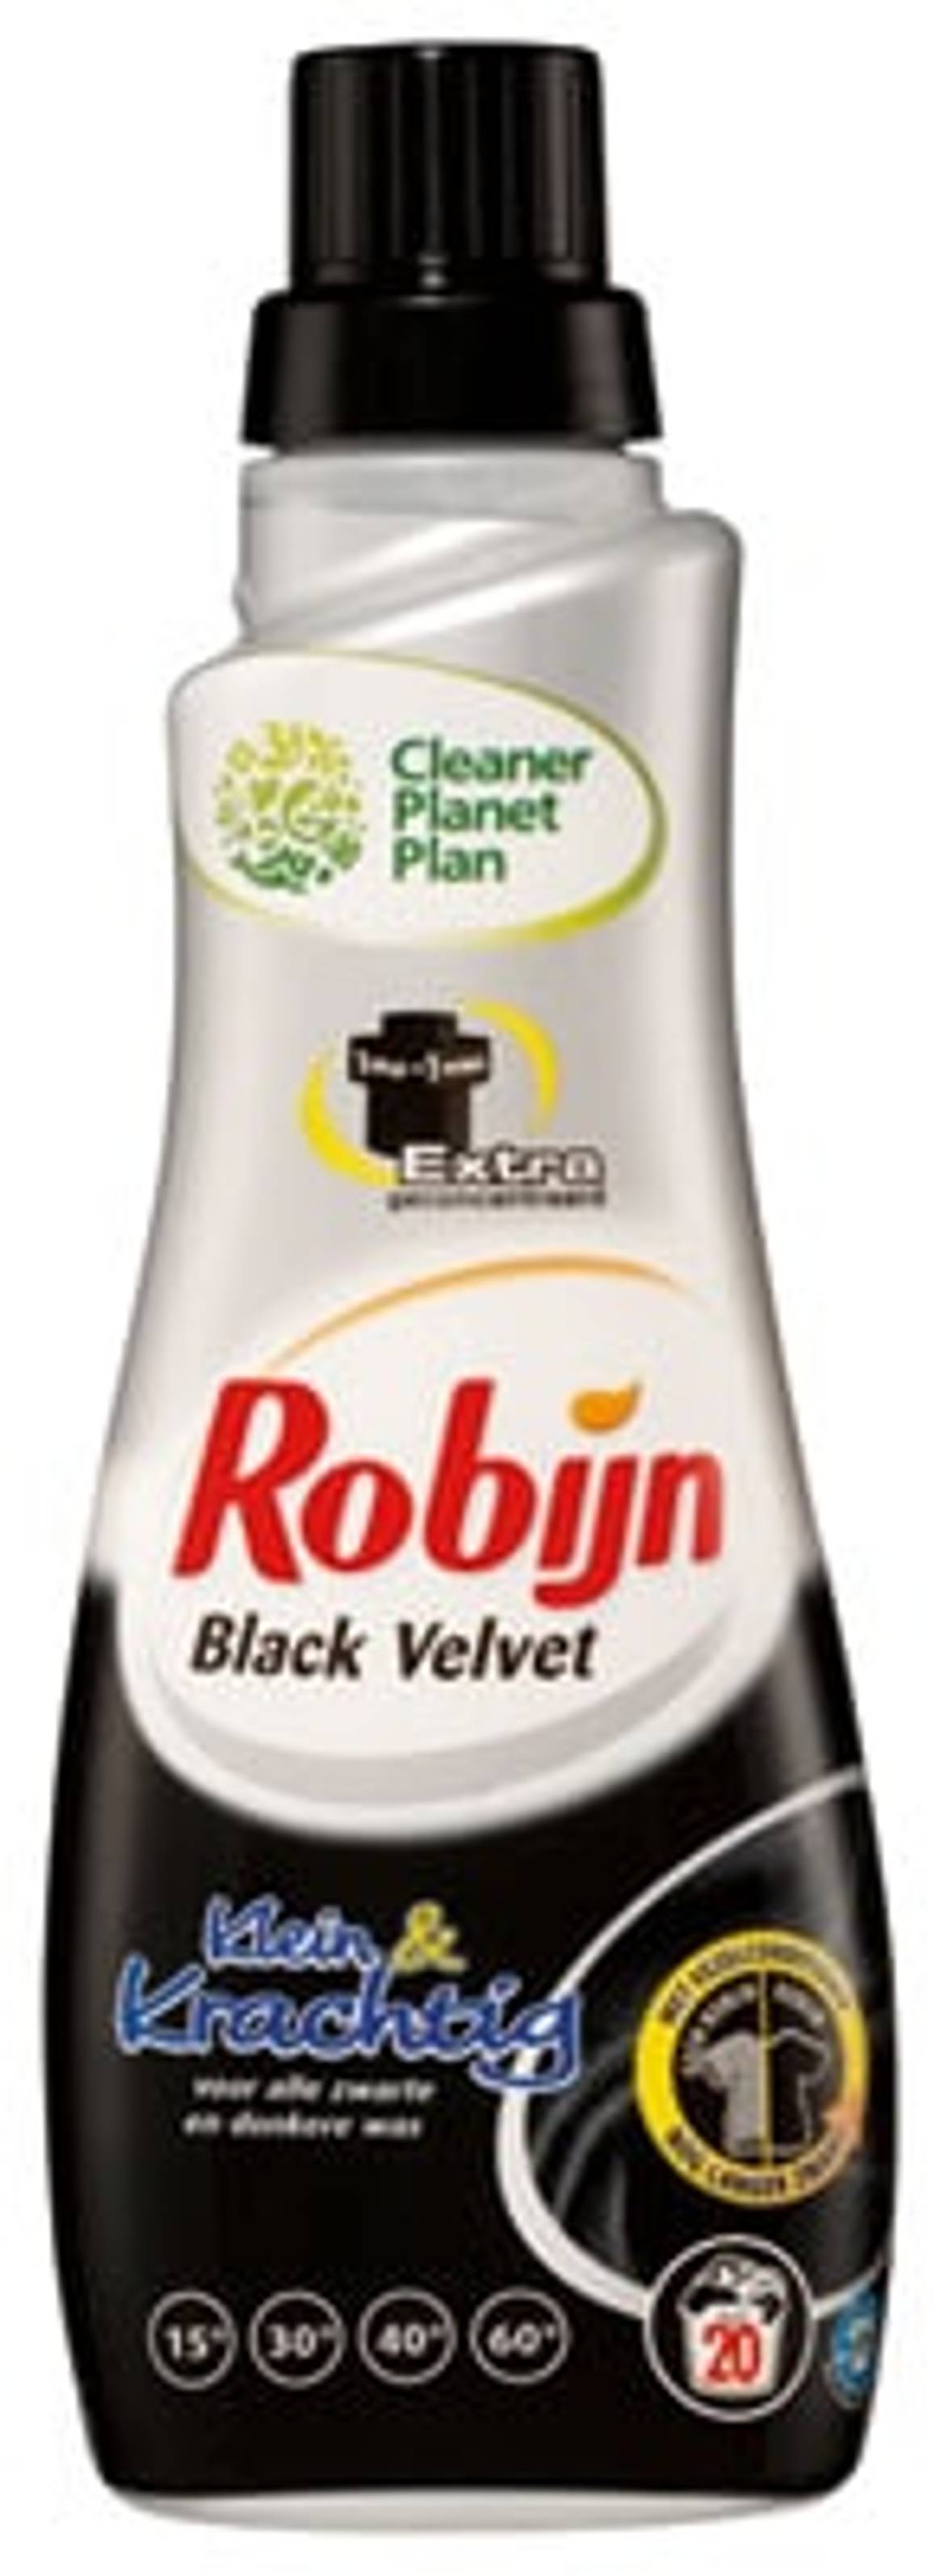 Robijn Klein & Krachtig Black Velvet